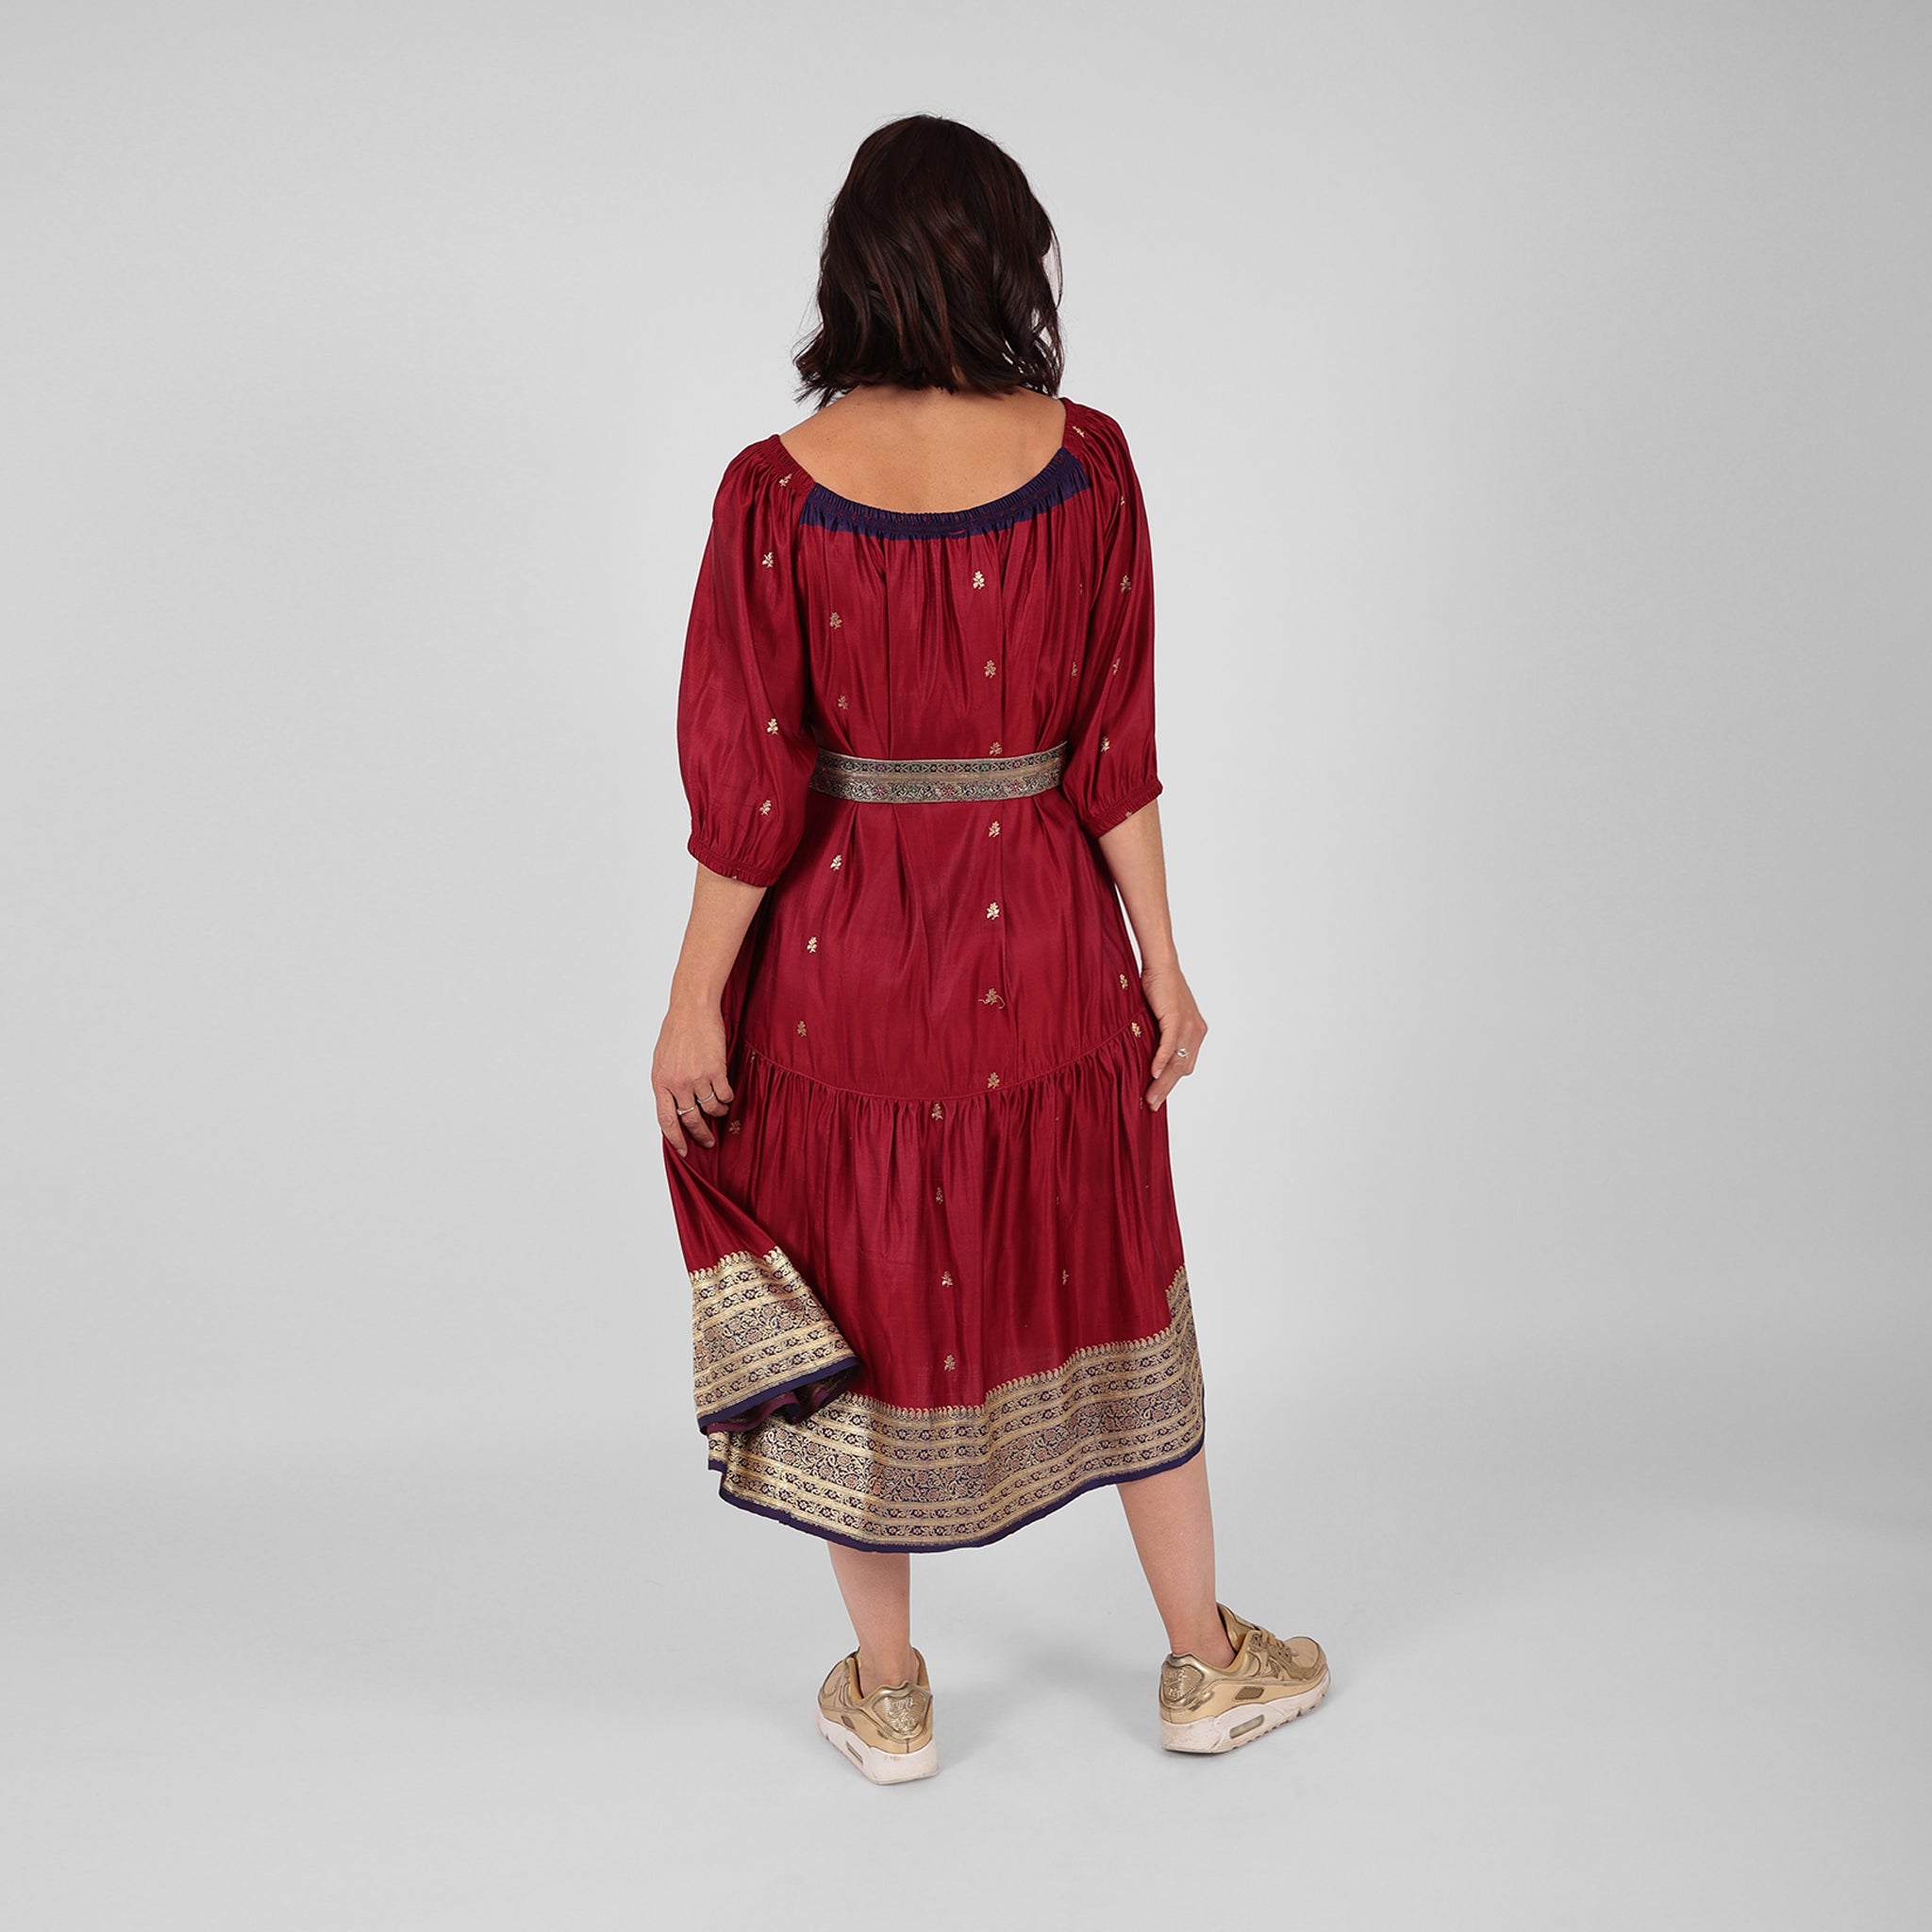 Ausus Ruby Red Vintage silk sari maxi dress